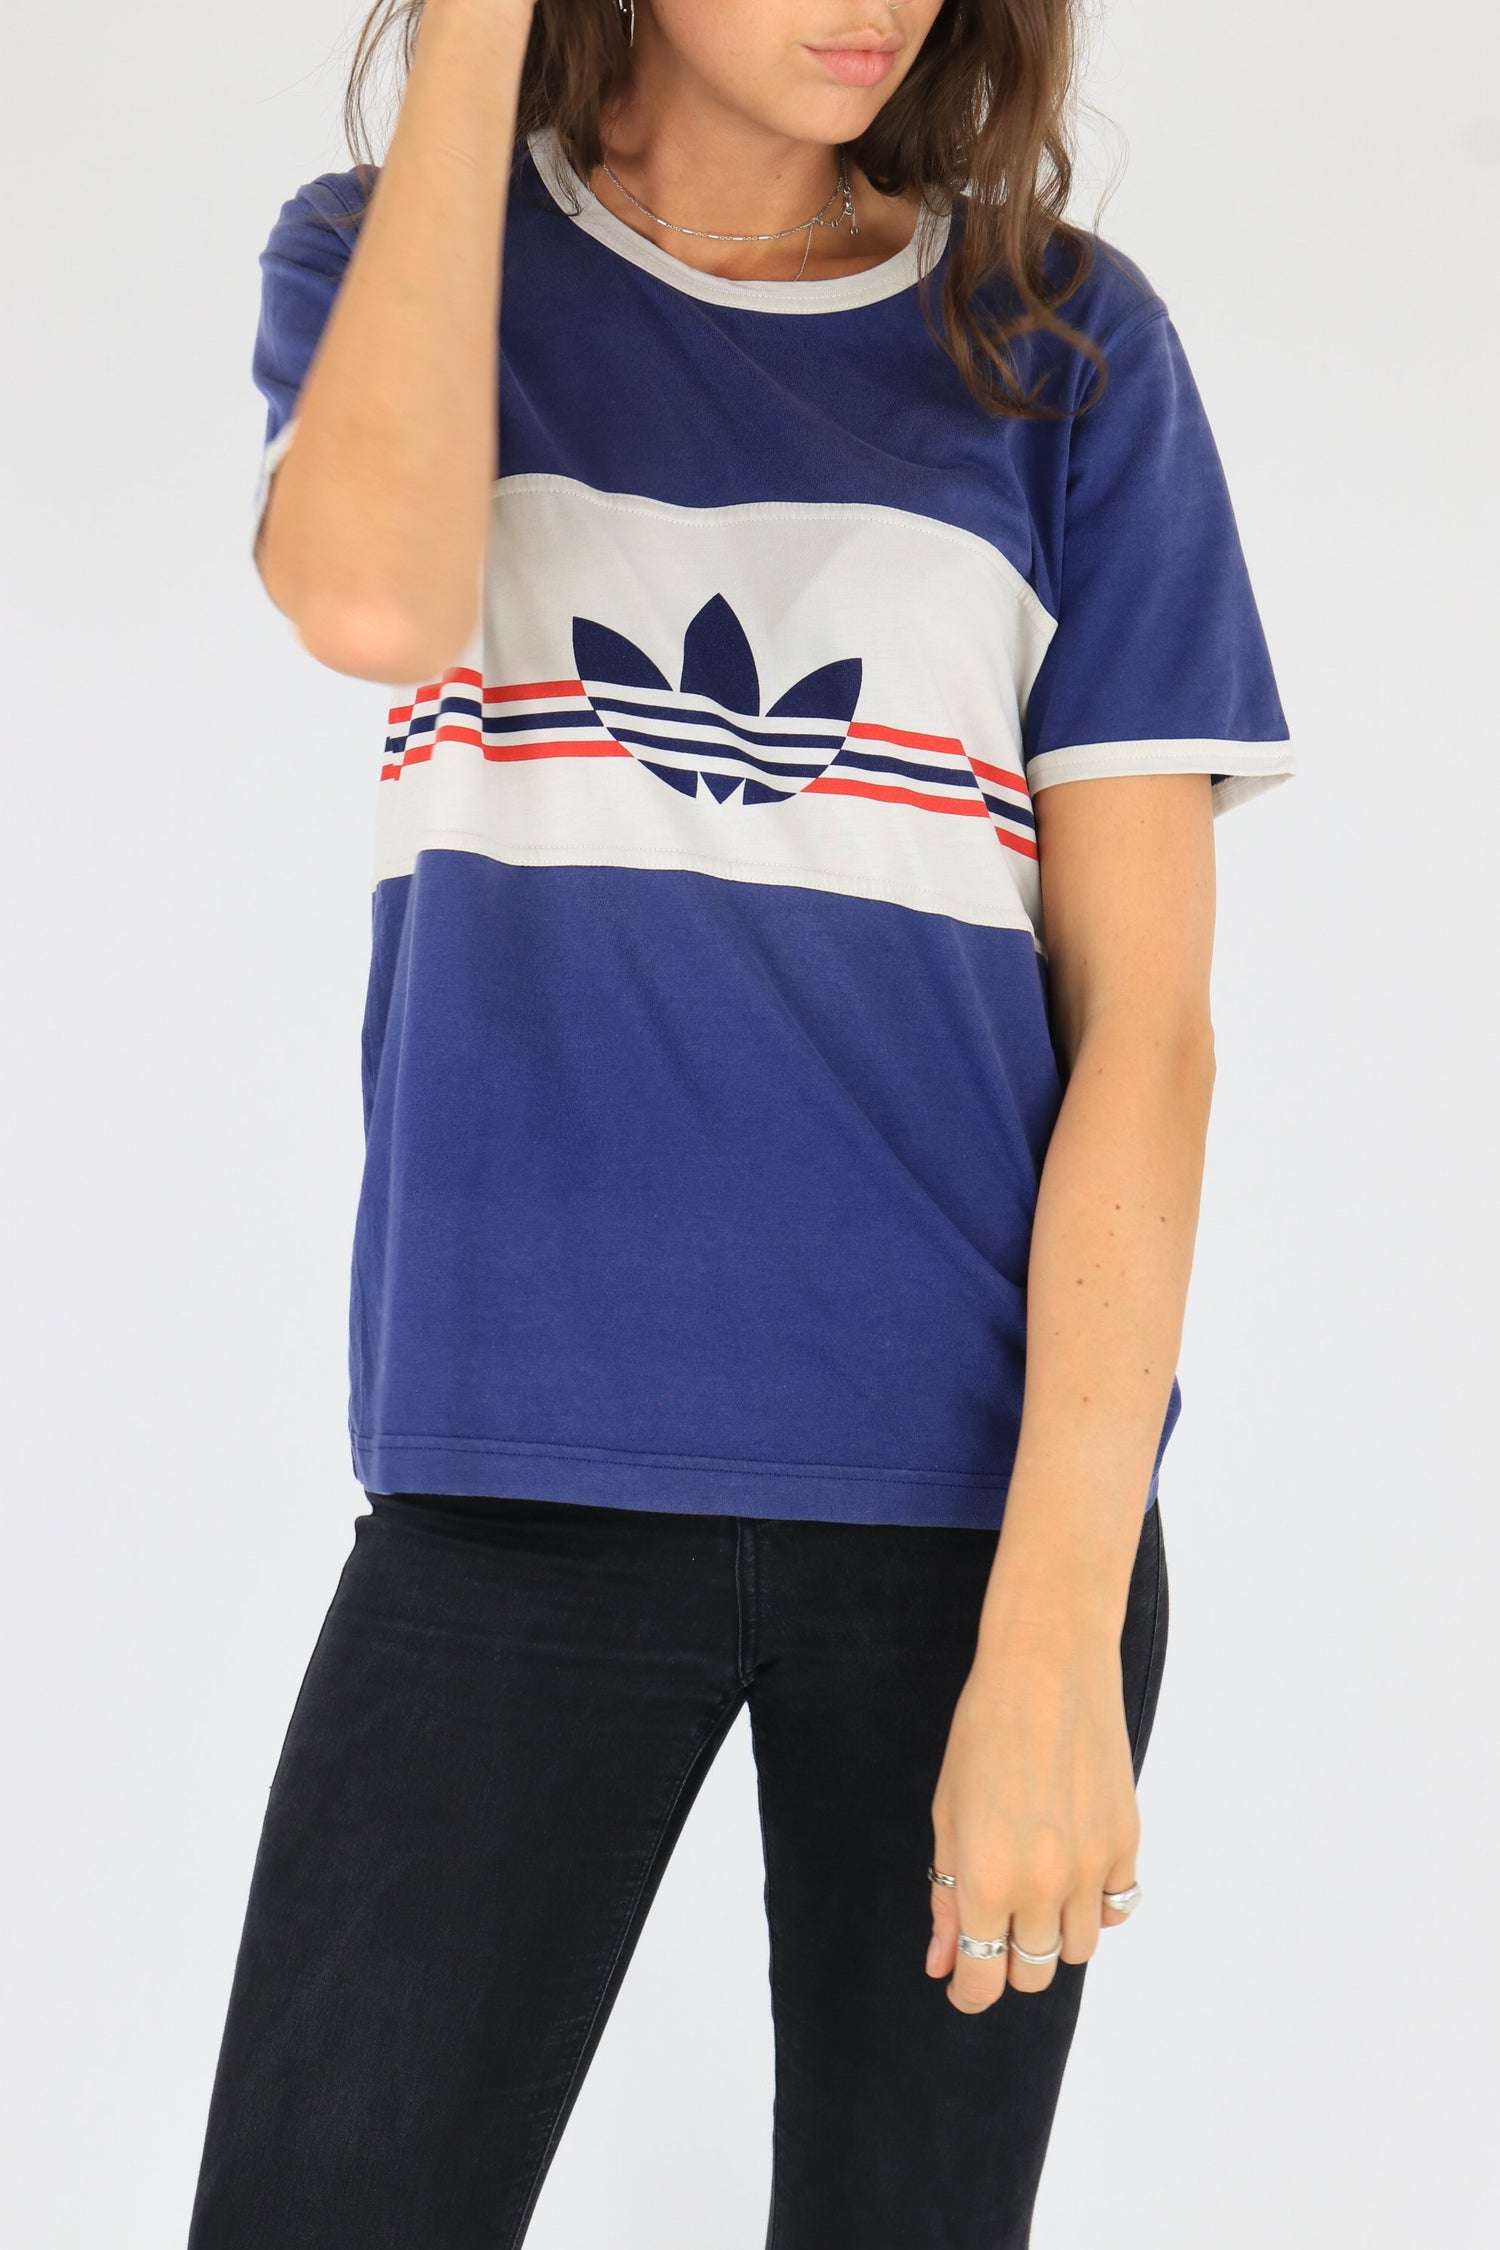 Adidas T-Shirt Blue/White Medium